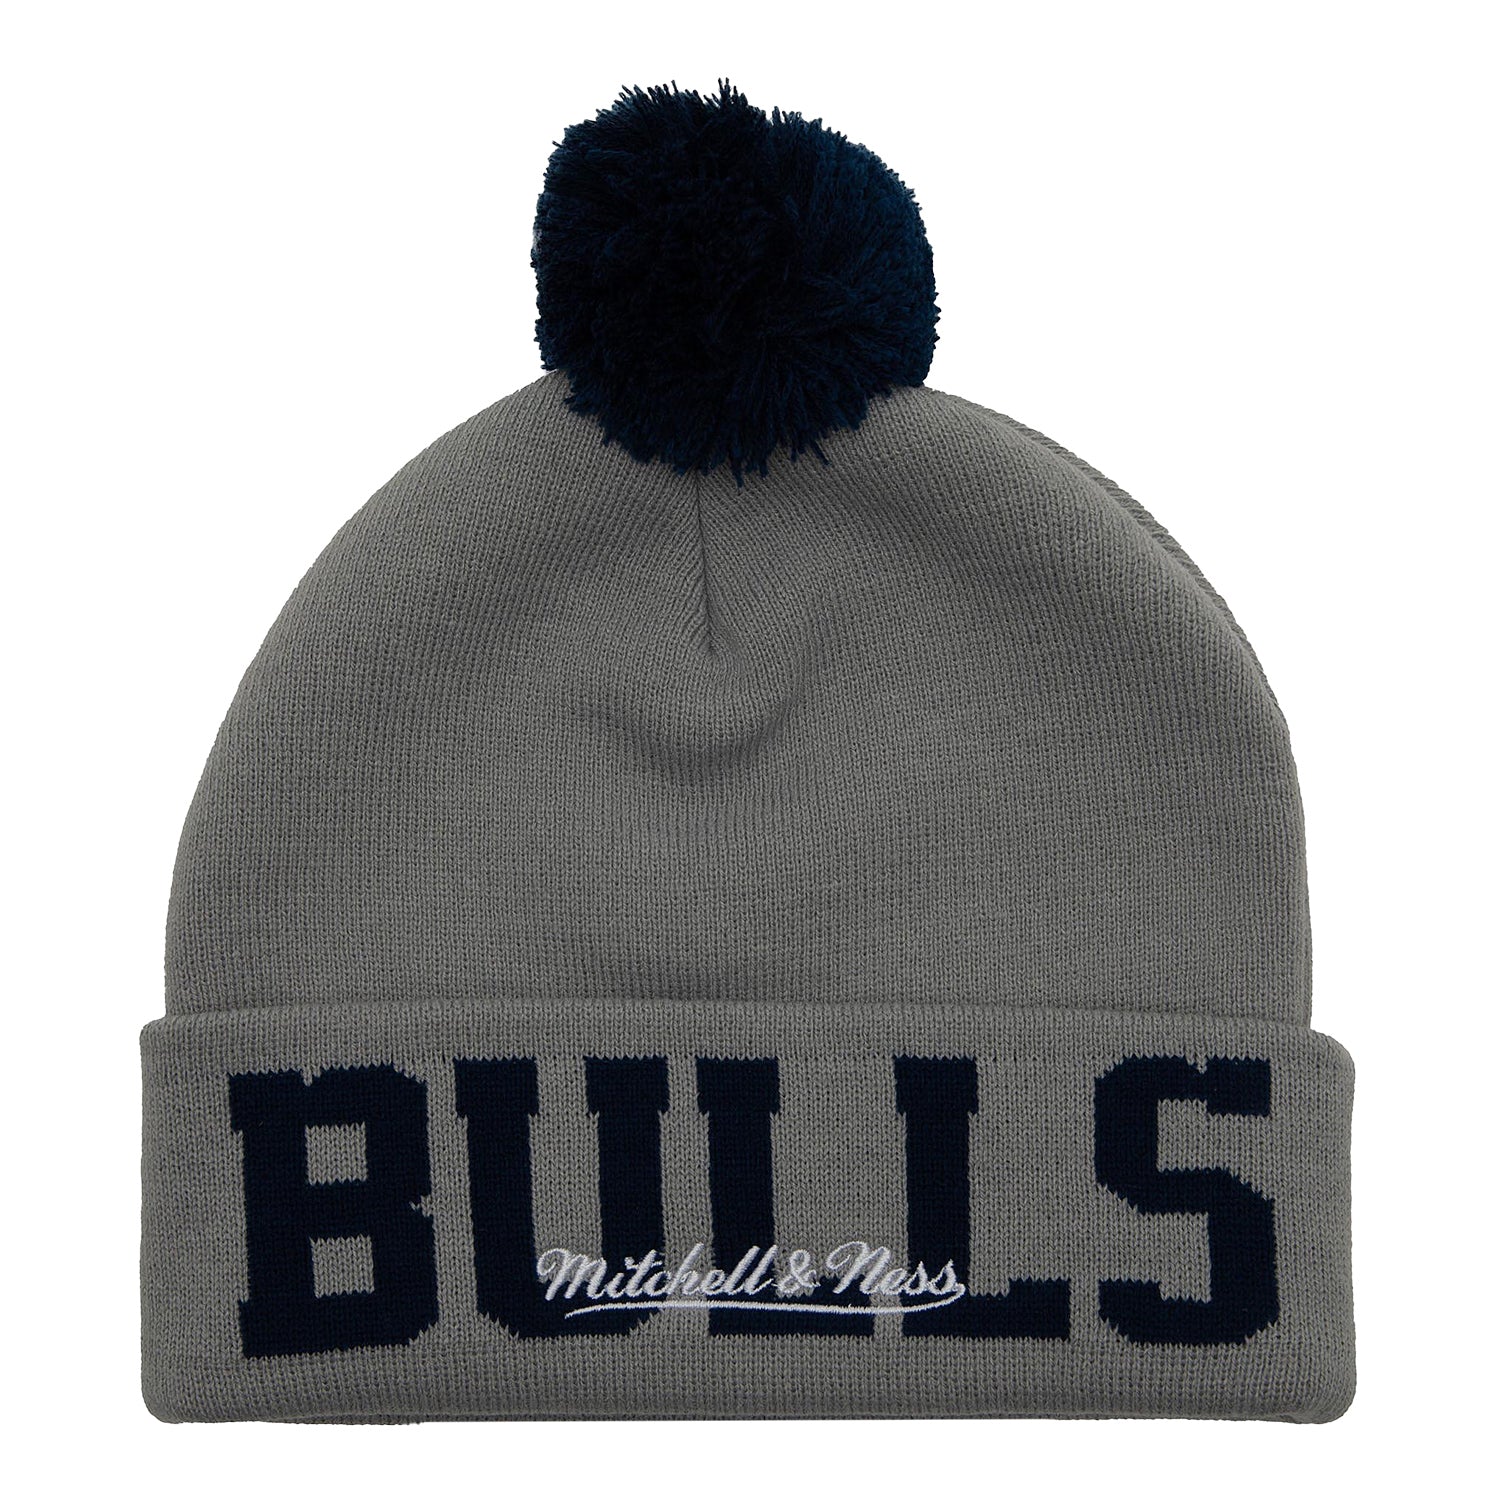 Chicago Bulls M&N Full Boar Knit Hat in grey - back view